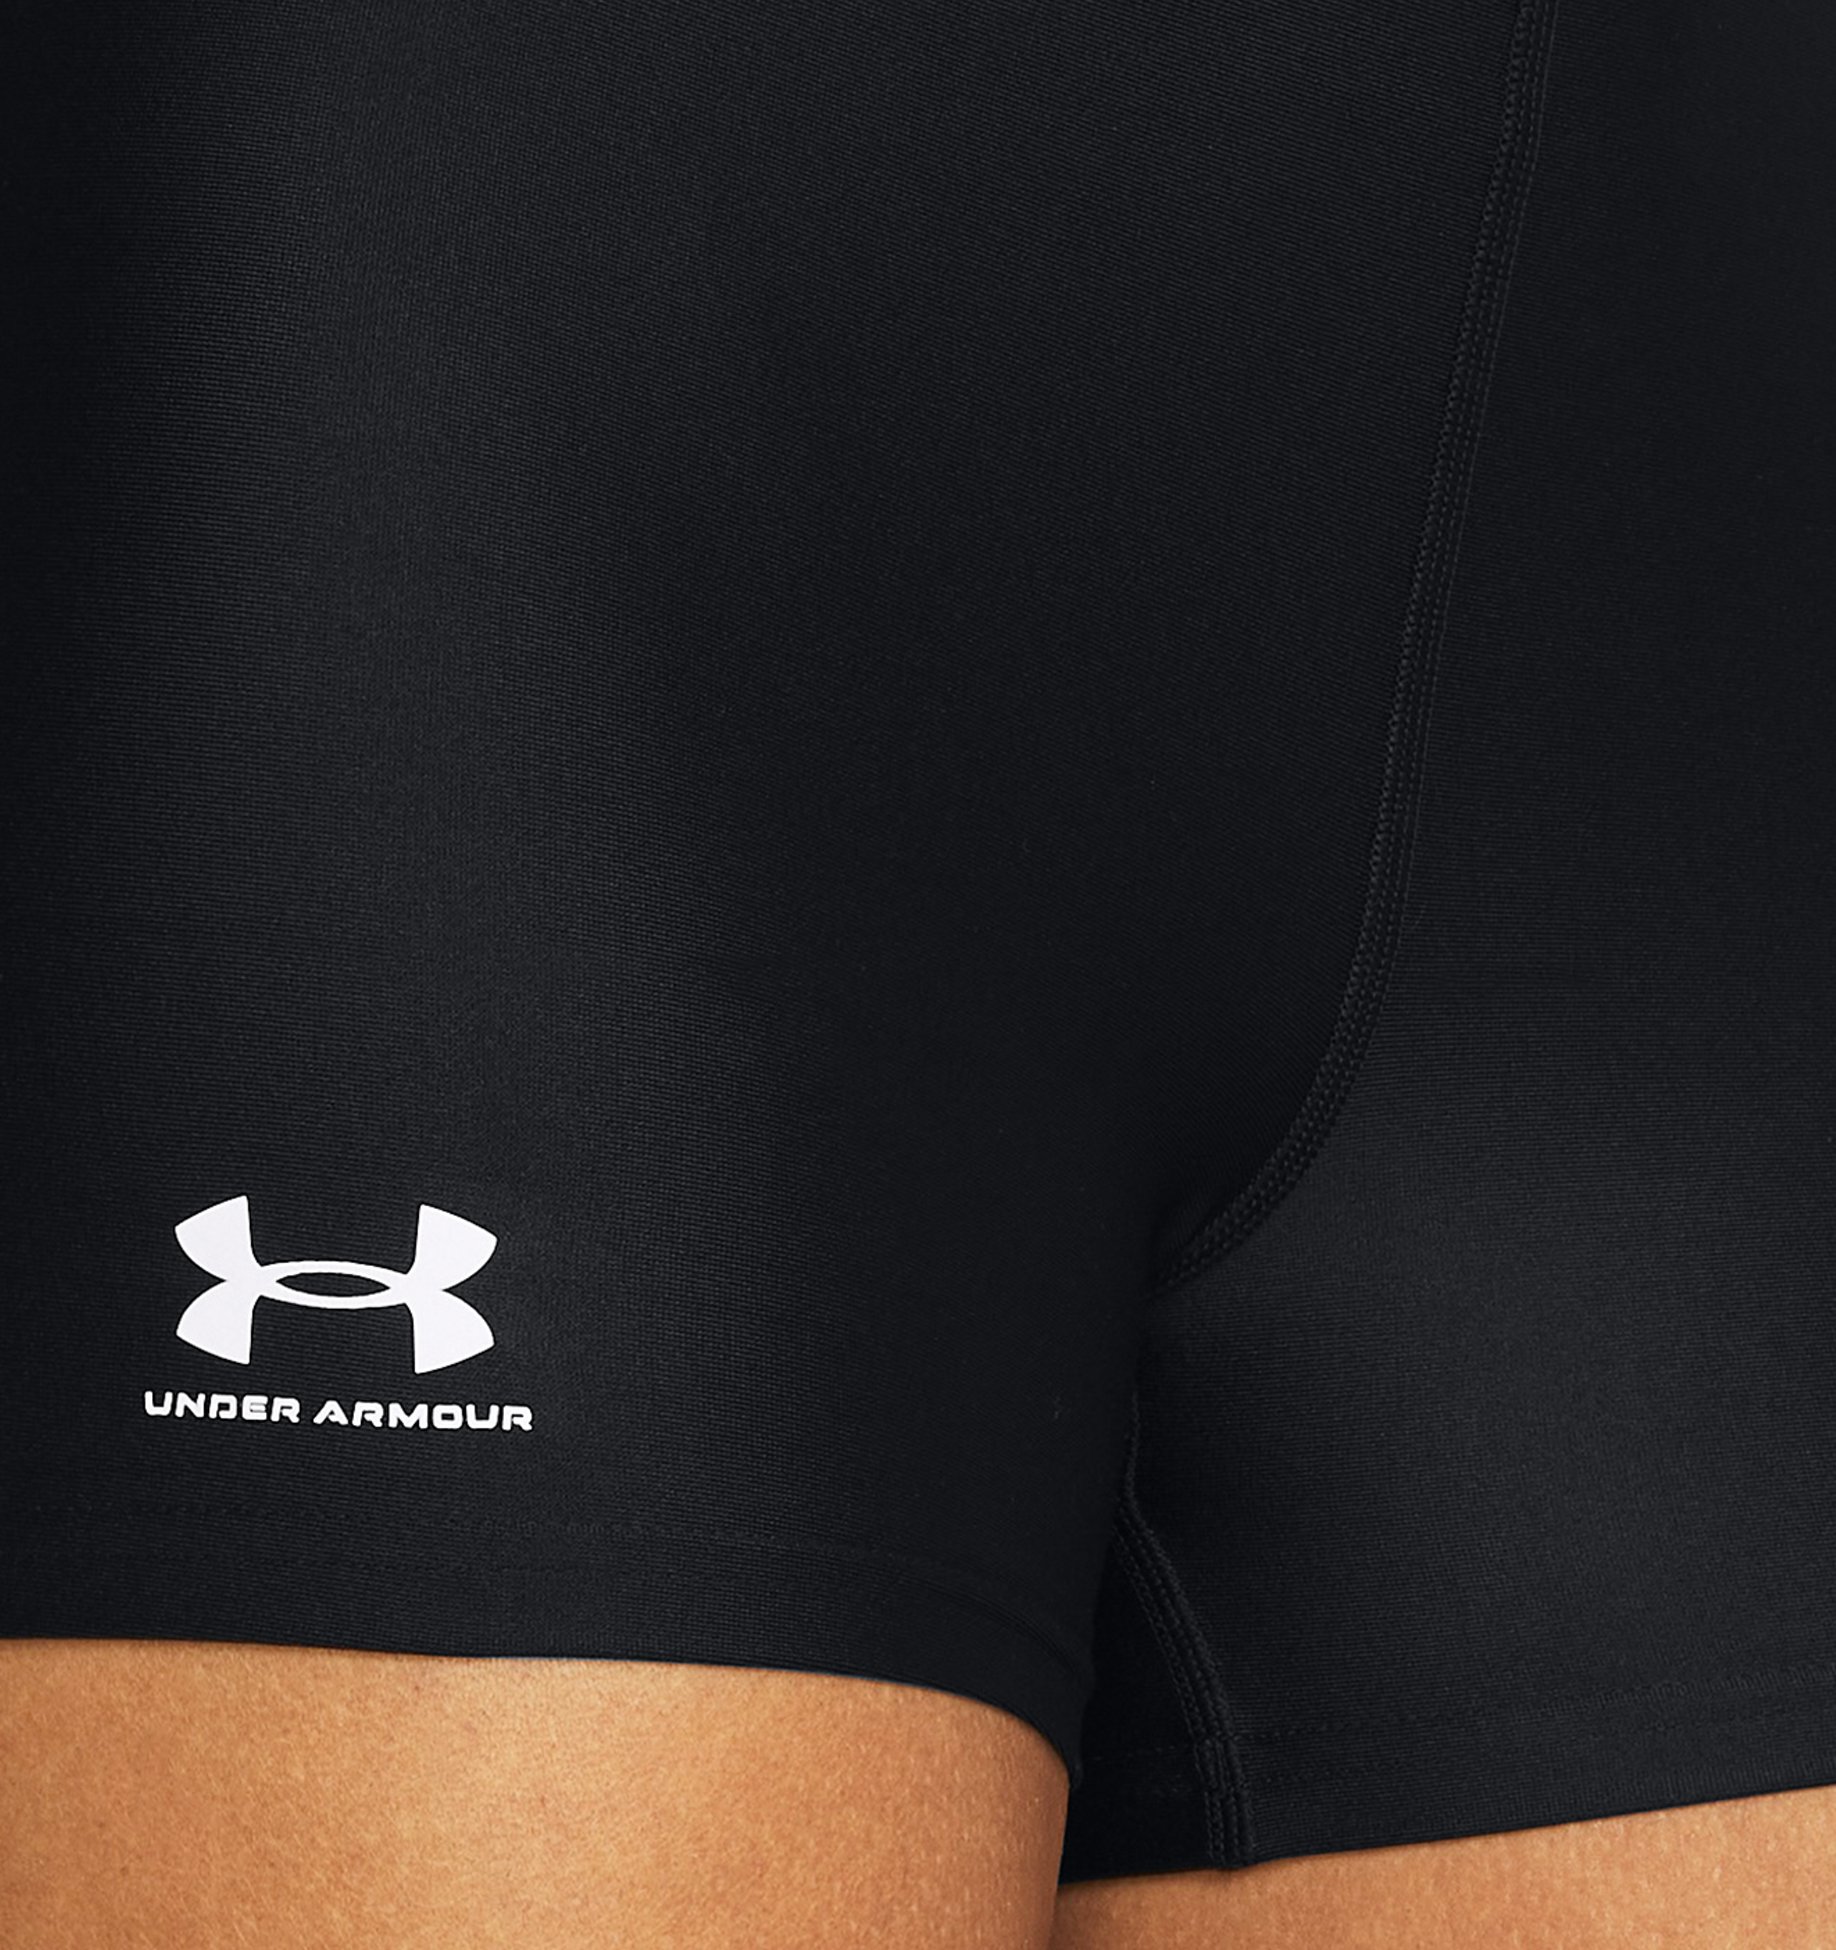 Under Armour Women's HeatGear 8 Shorts - BLACK, Michael Murphy Sports, Donegal